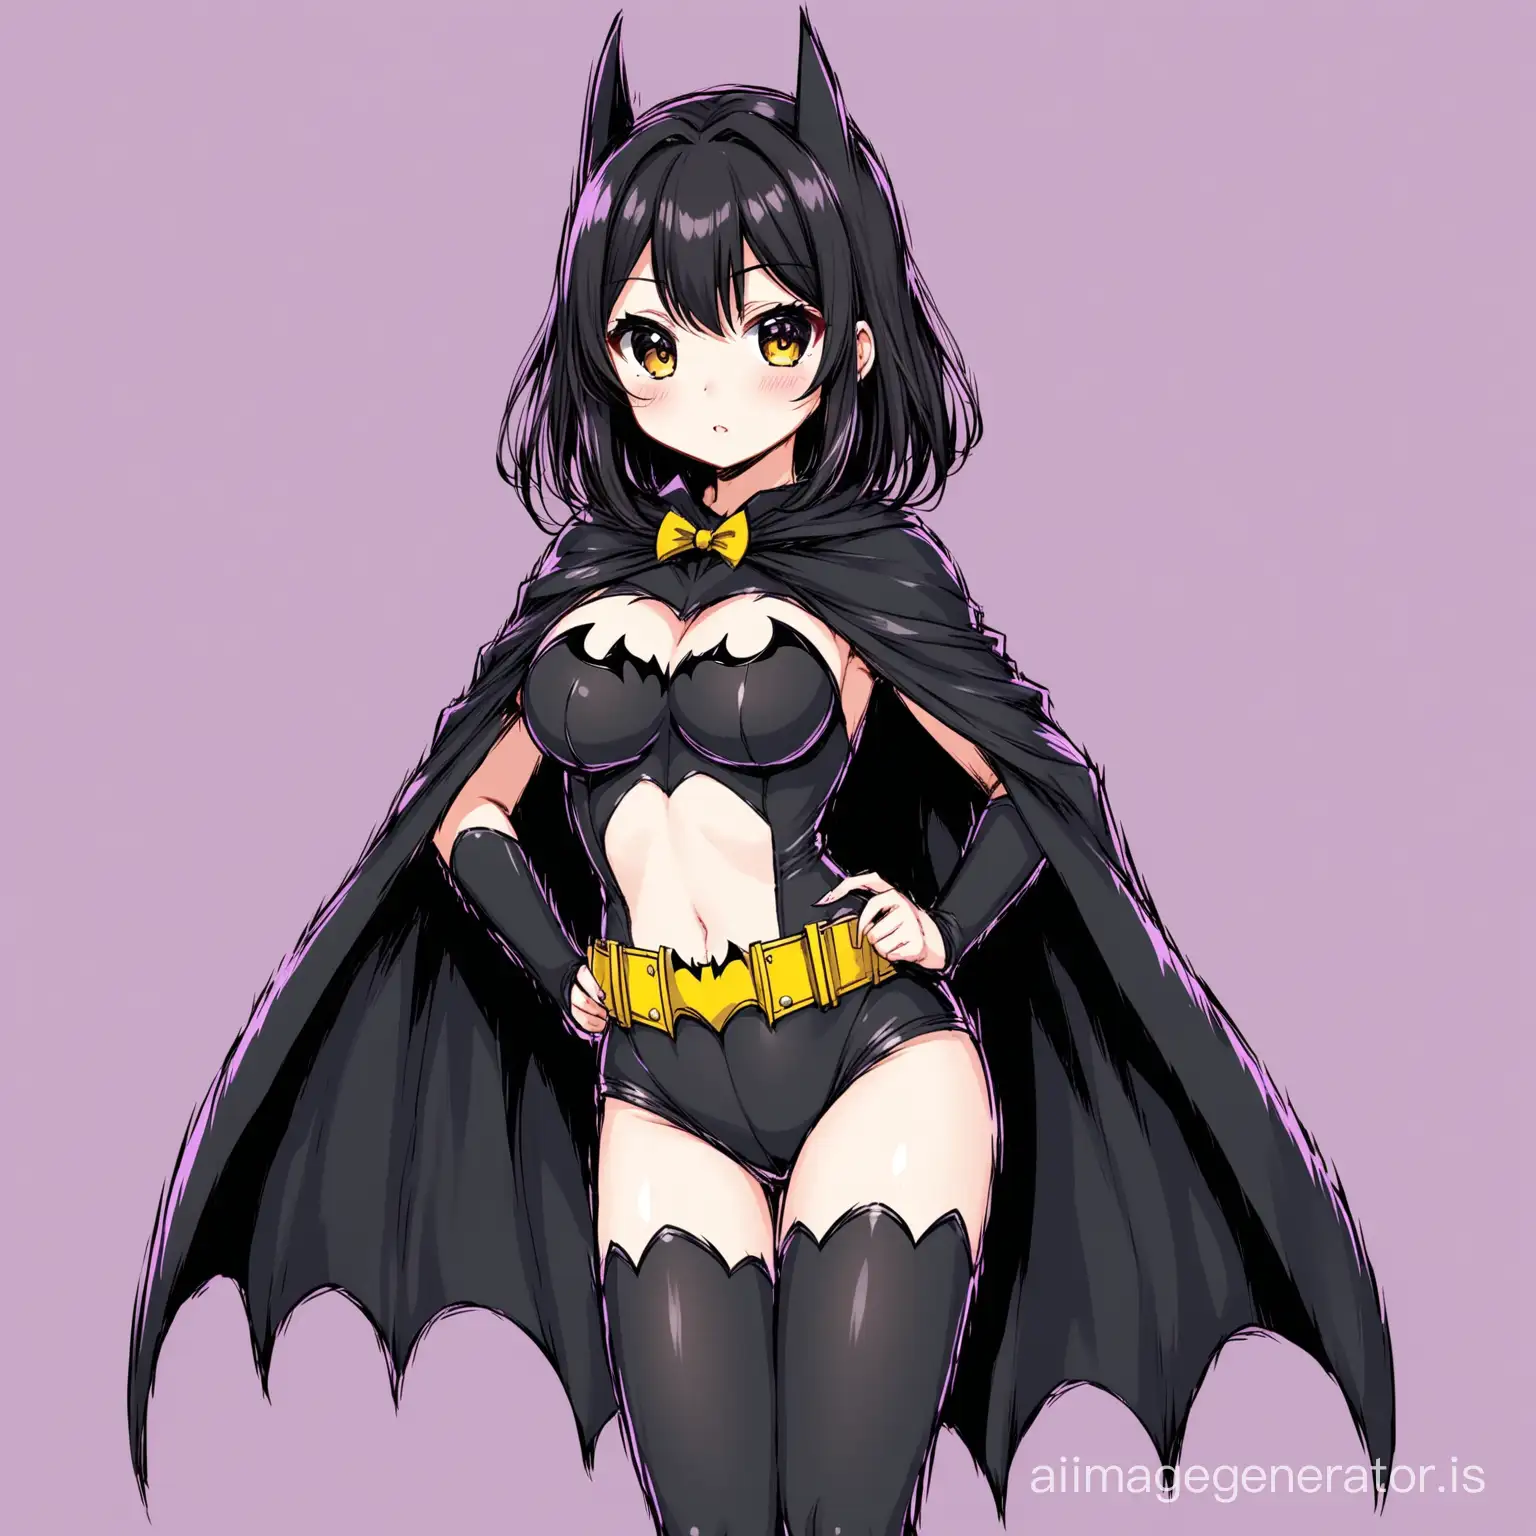 Cute-Anime-Girl-Cosplaying-as-Batman-with-Adorable-Kawaii-Costume-and-Cape